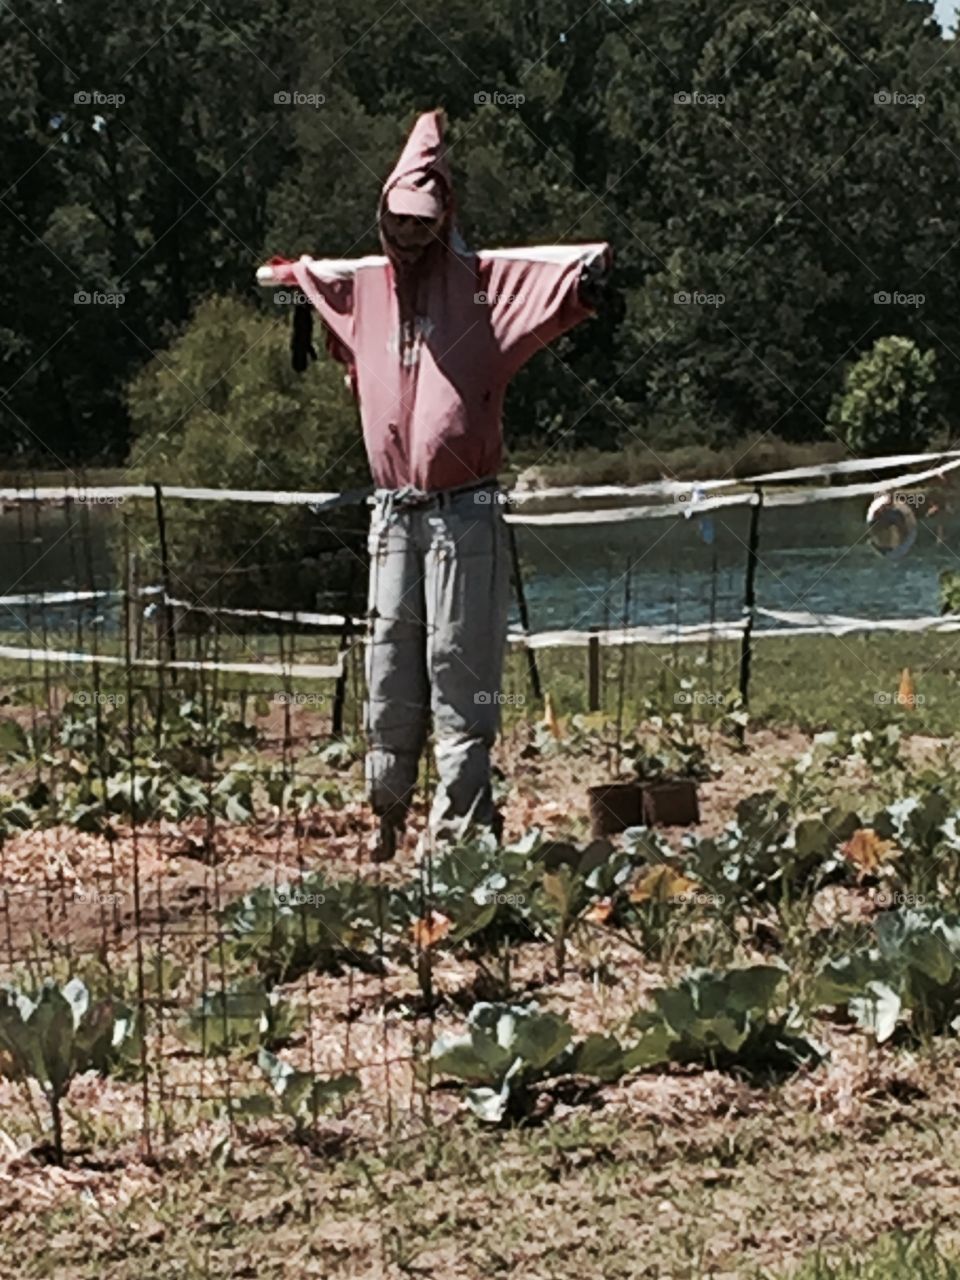 The Scarecrow and the Garden